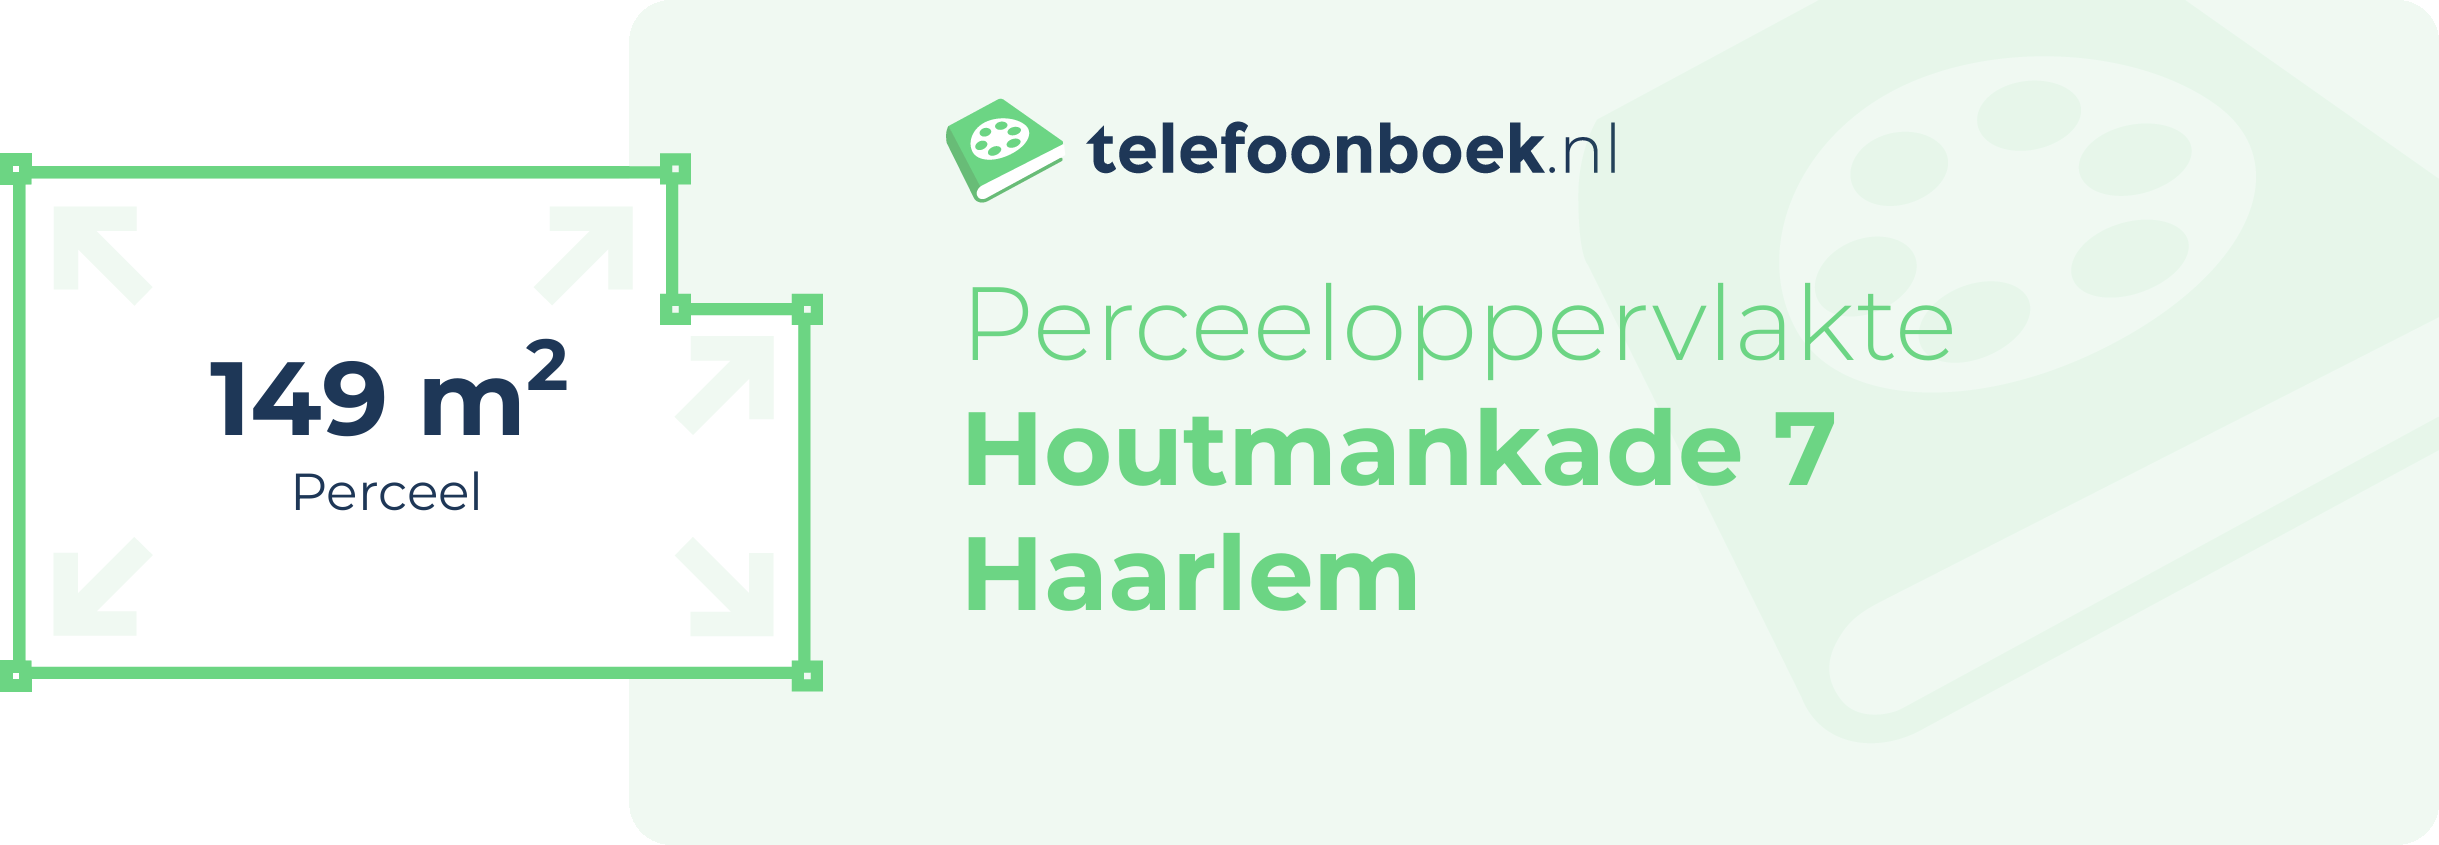 Perceeloppervlakte Houtmankade 7 Haarlem